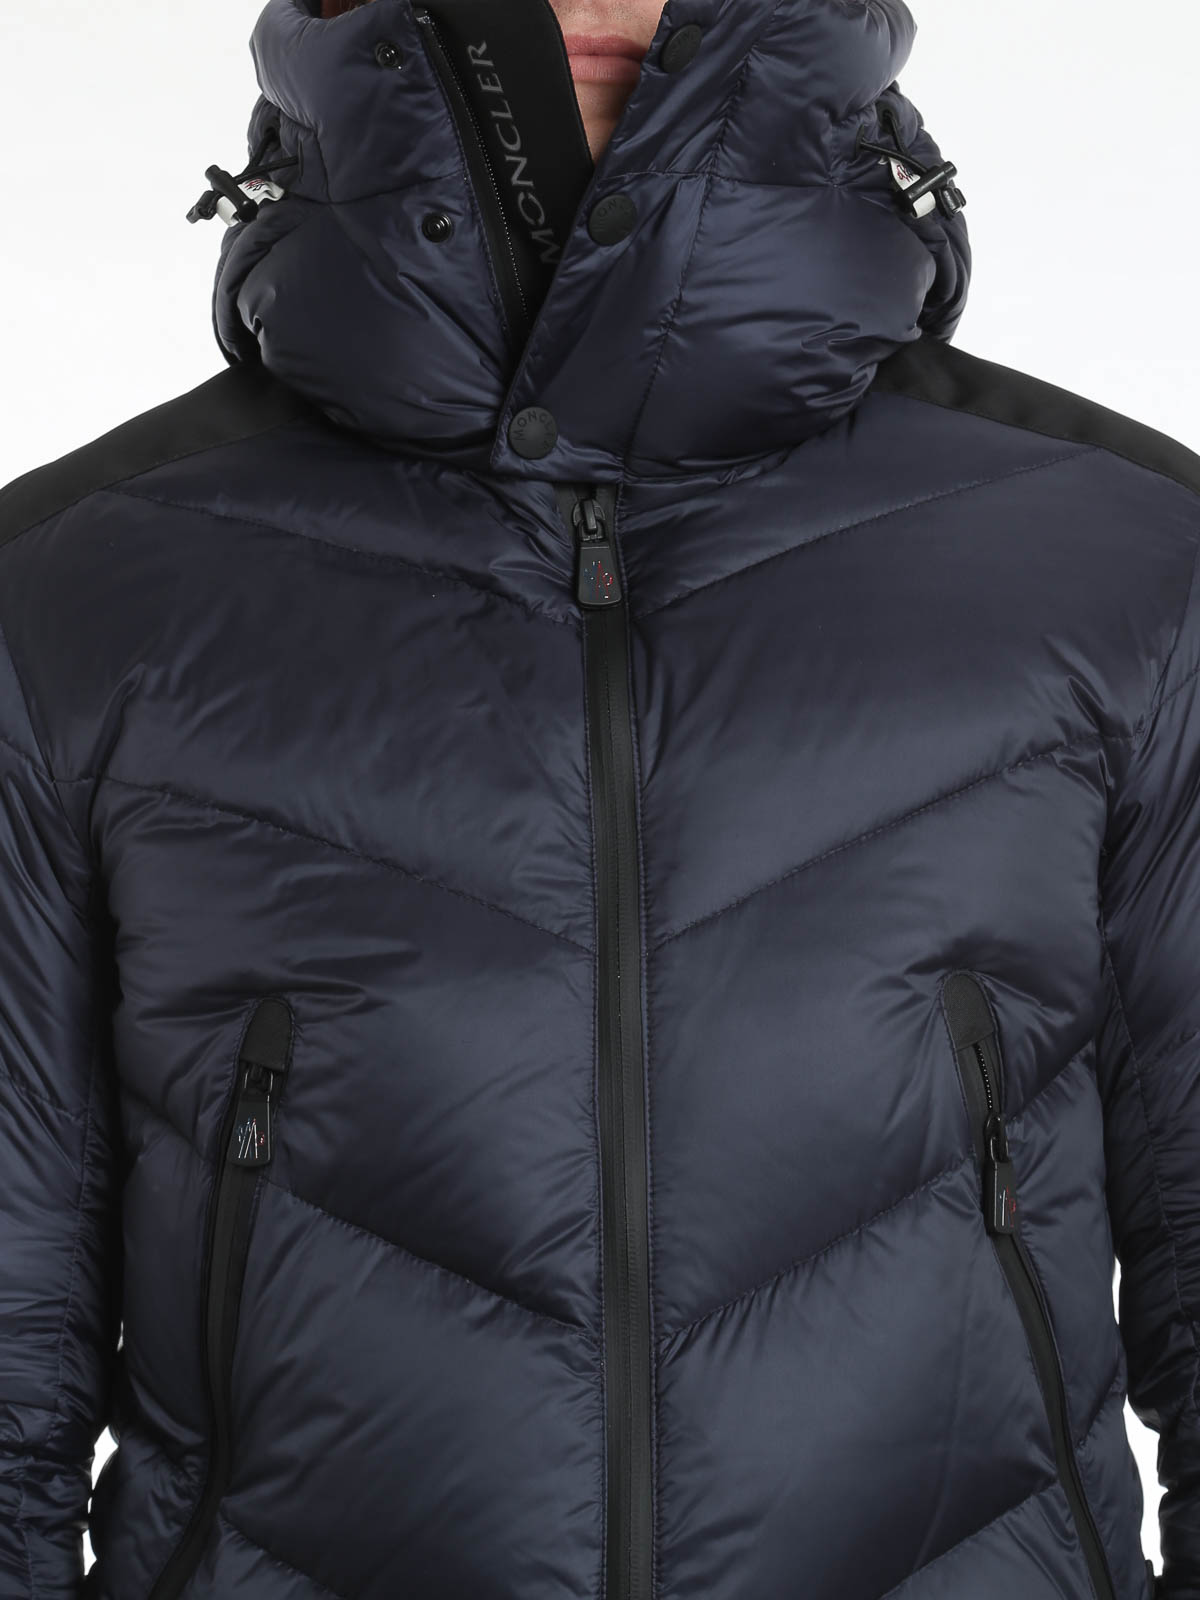 Moncler Grenoble Zip-Fastening Padded Jacket